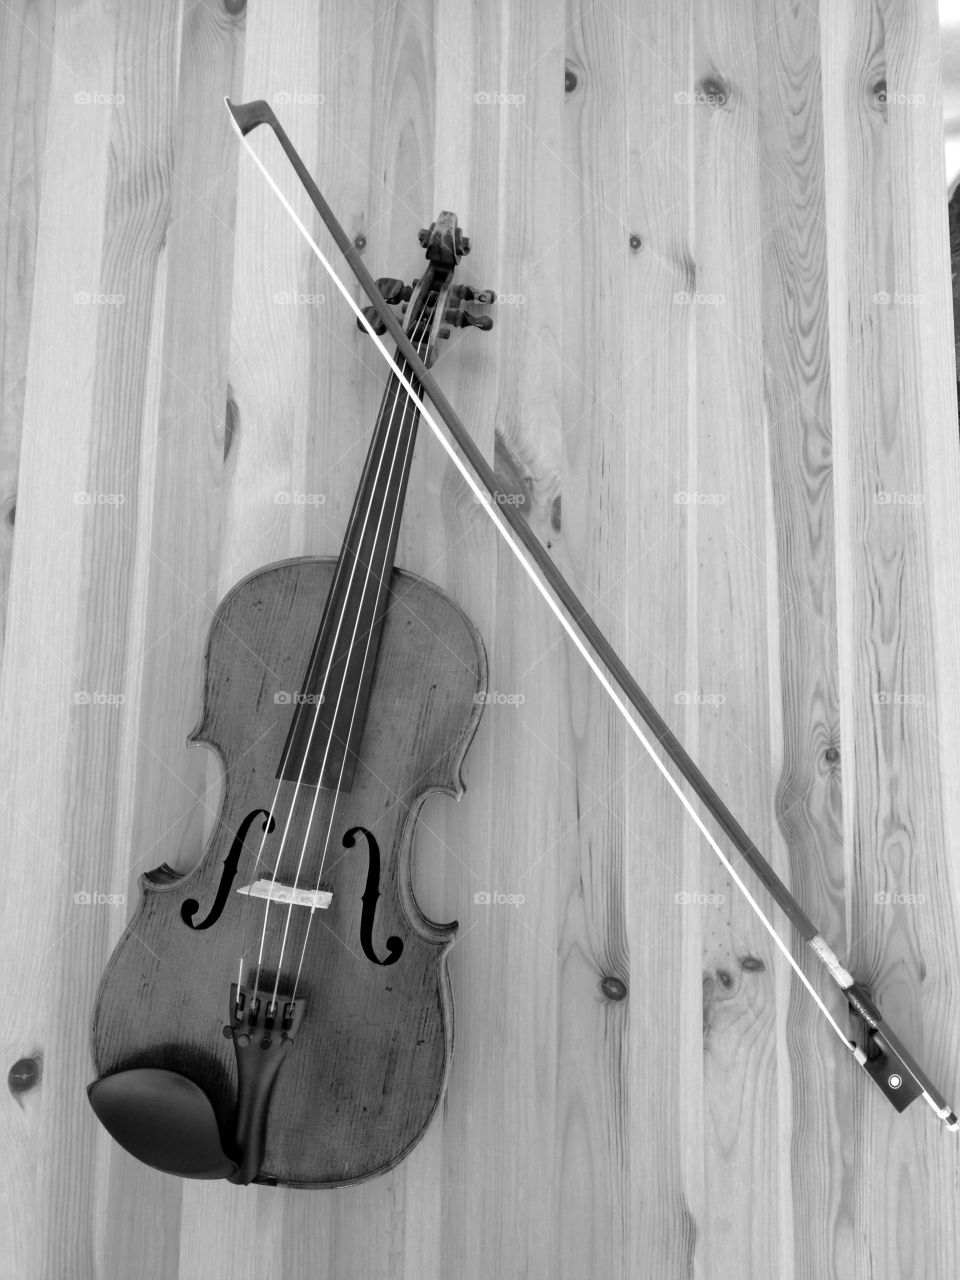 blach and white violin II